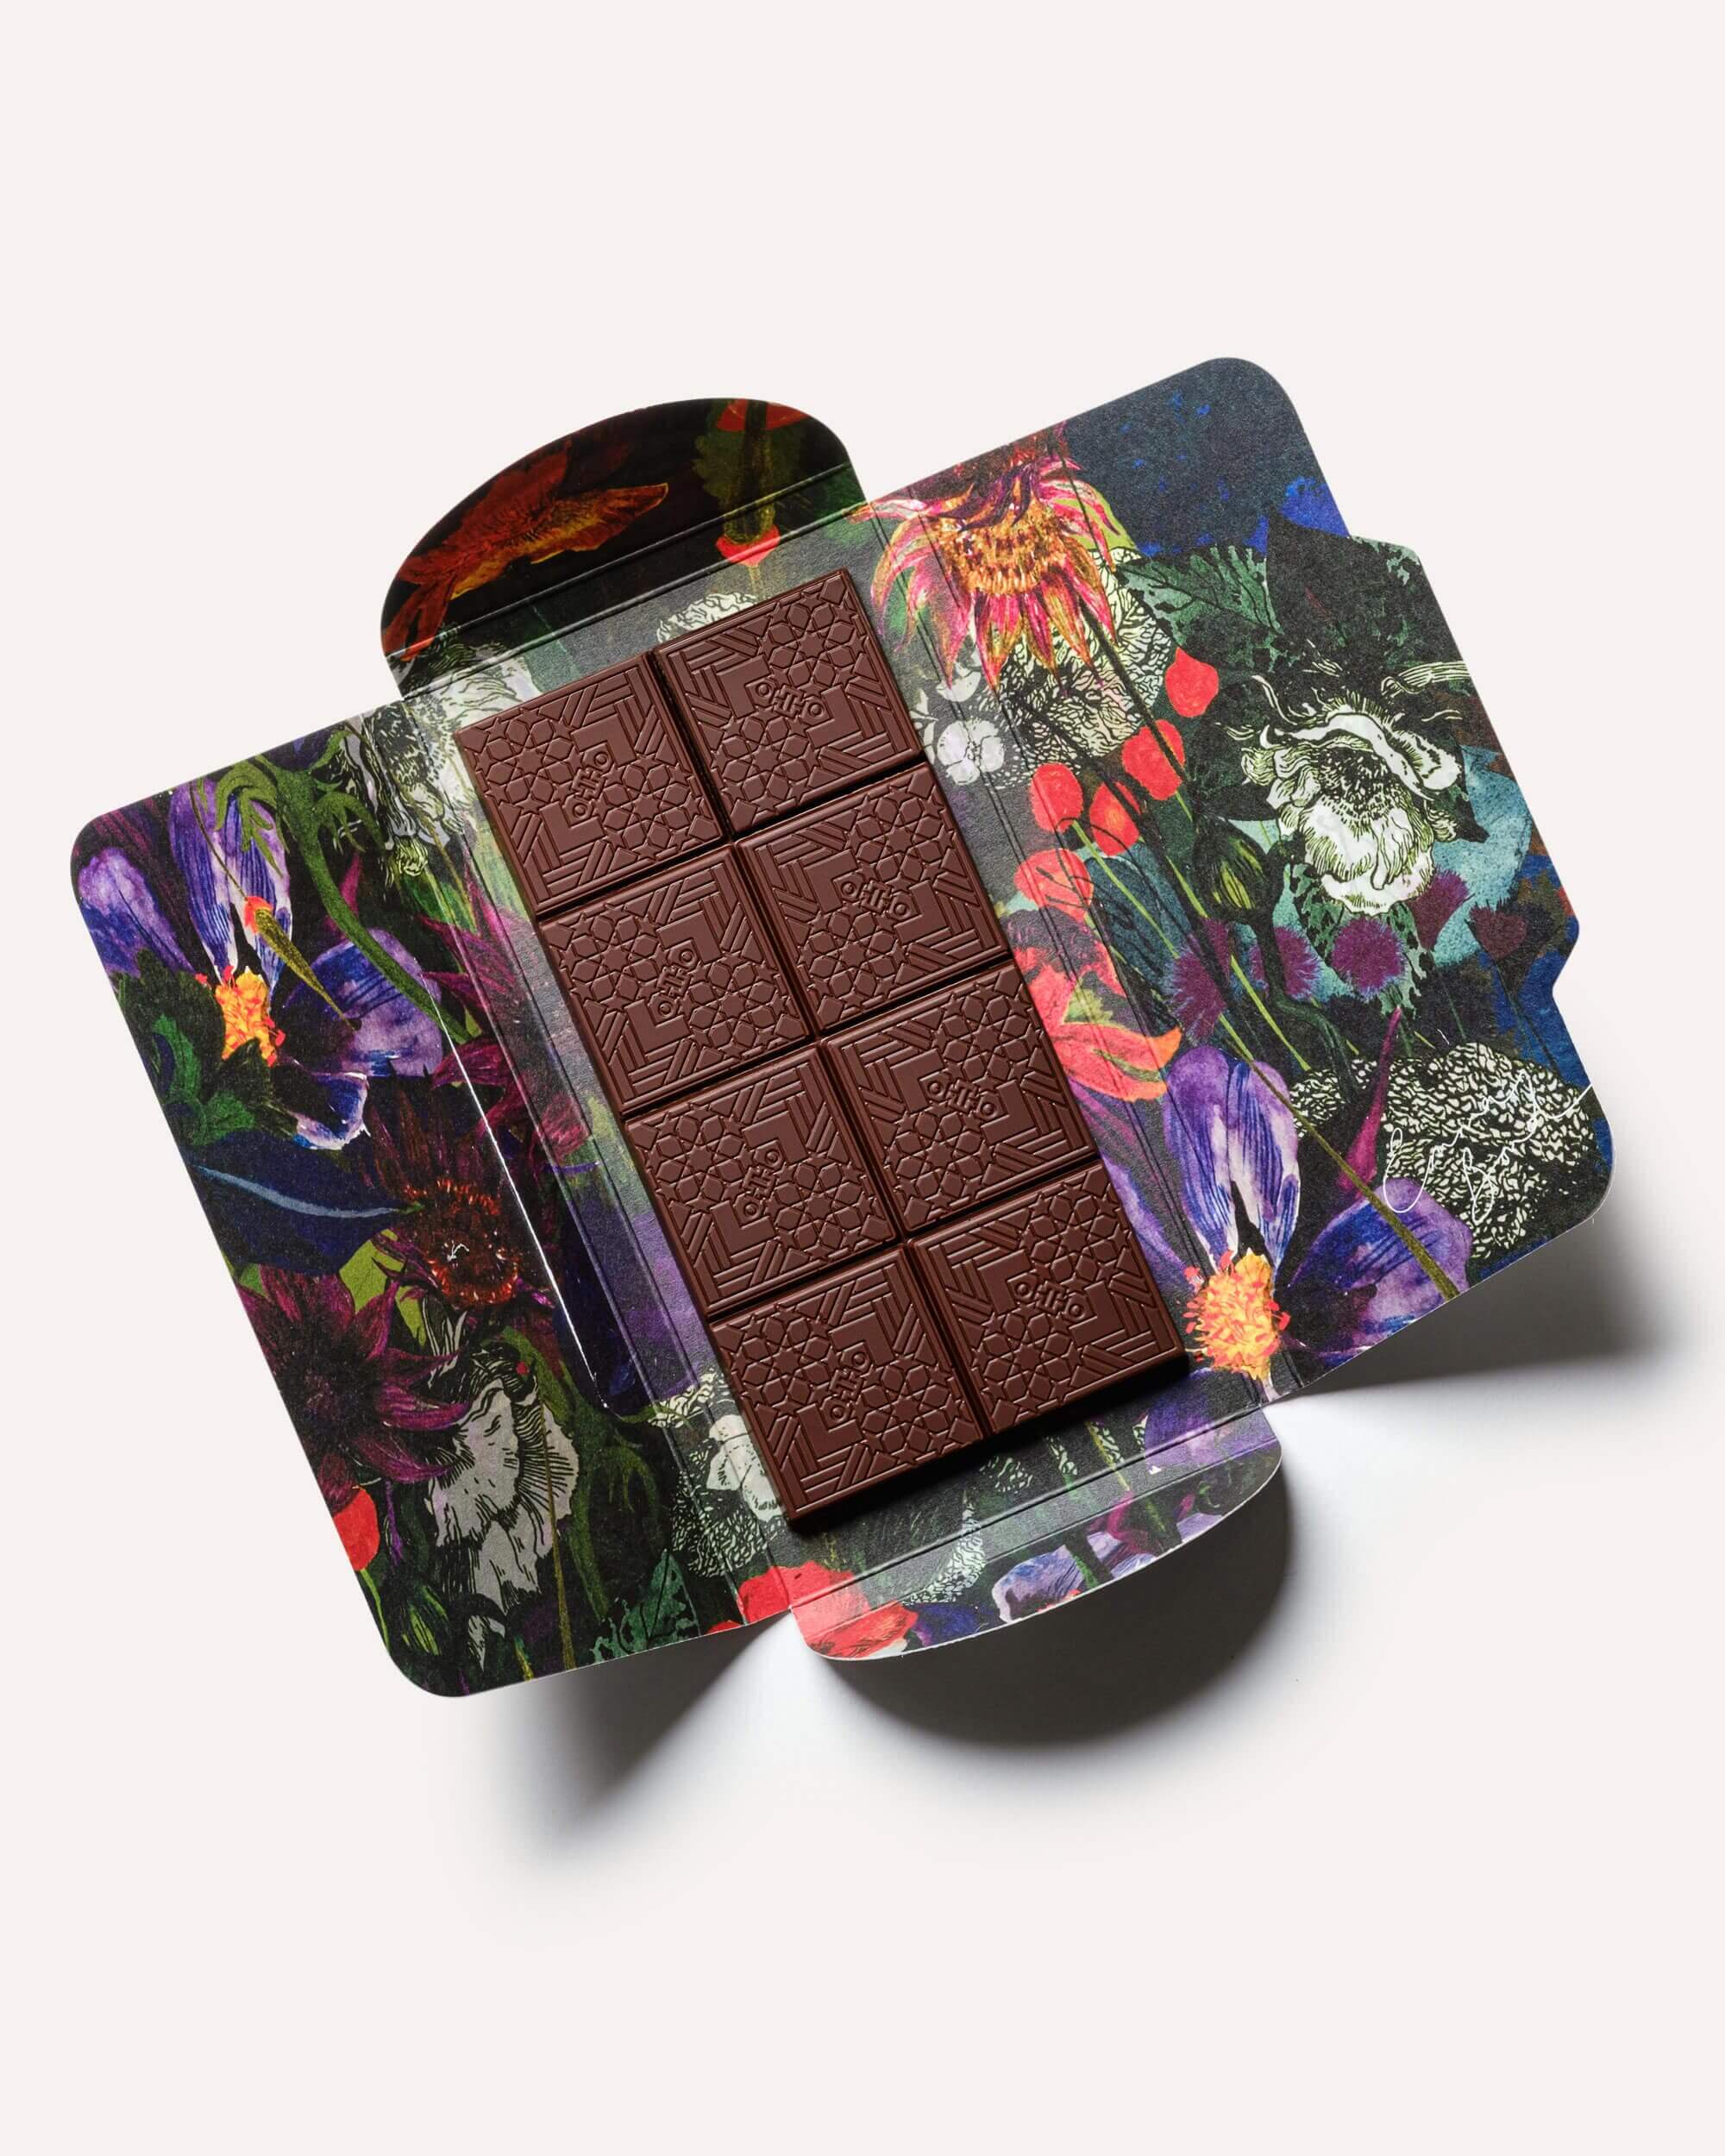 CBNight Dark Chocolate floral packaging open